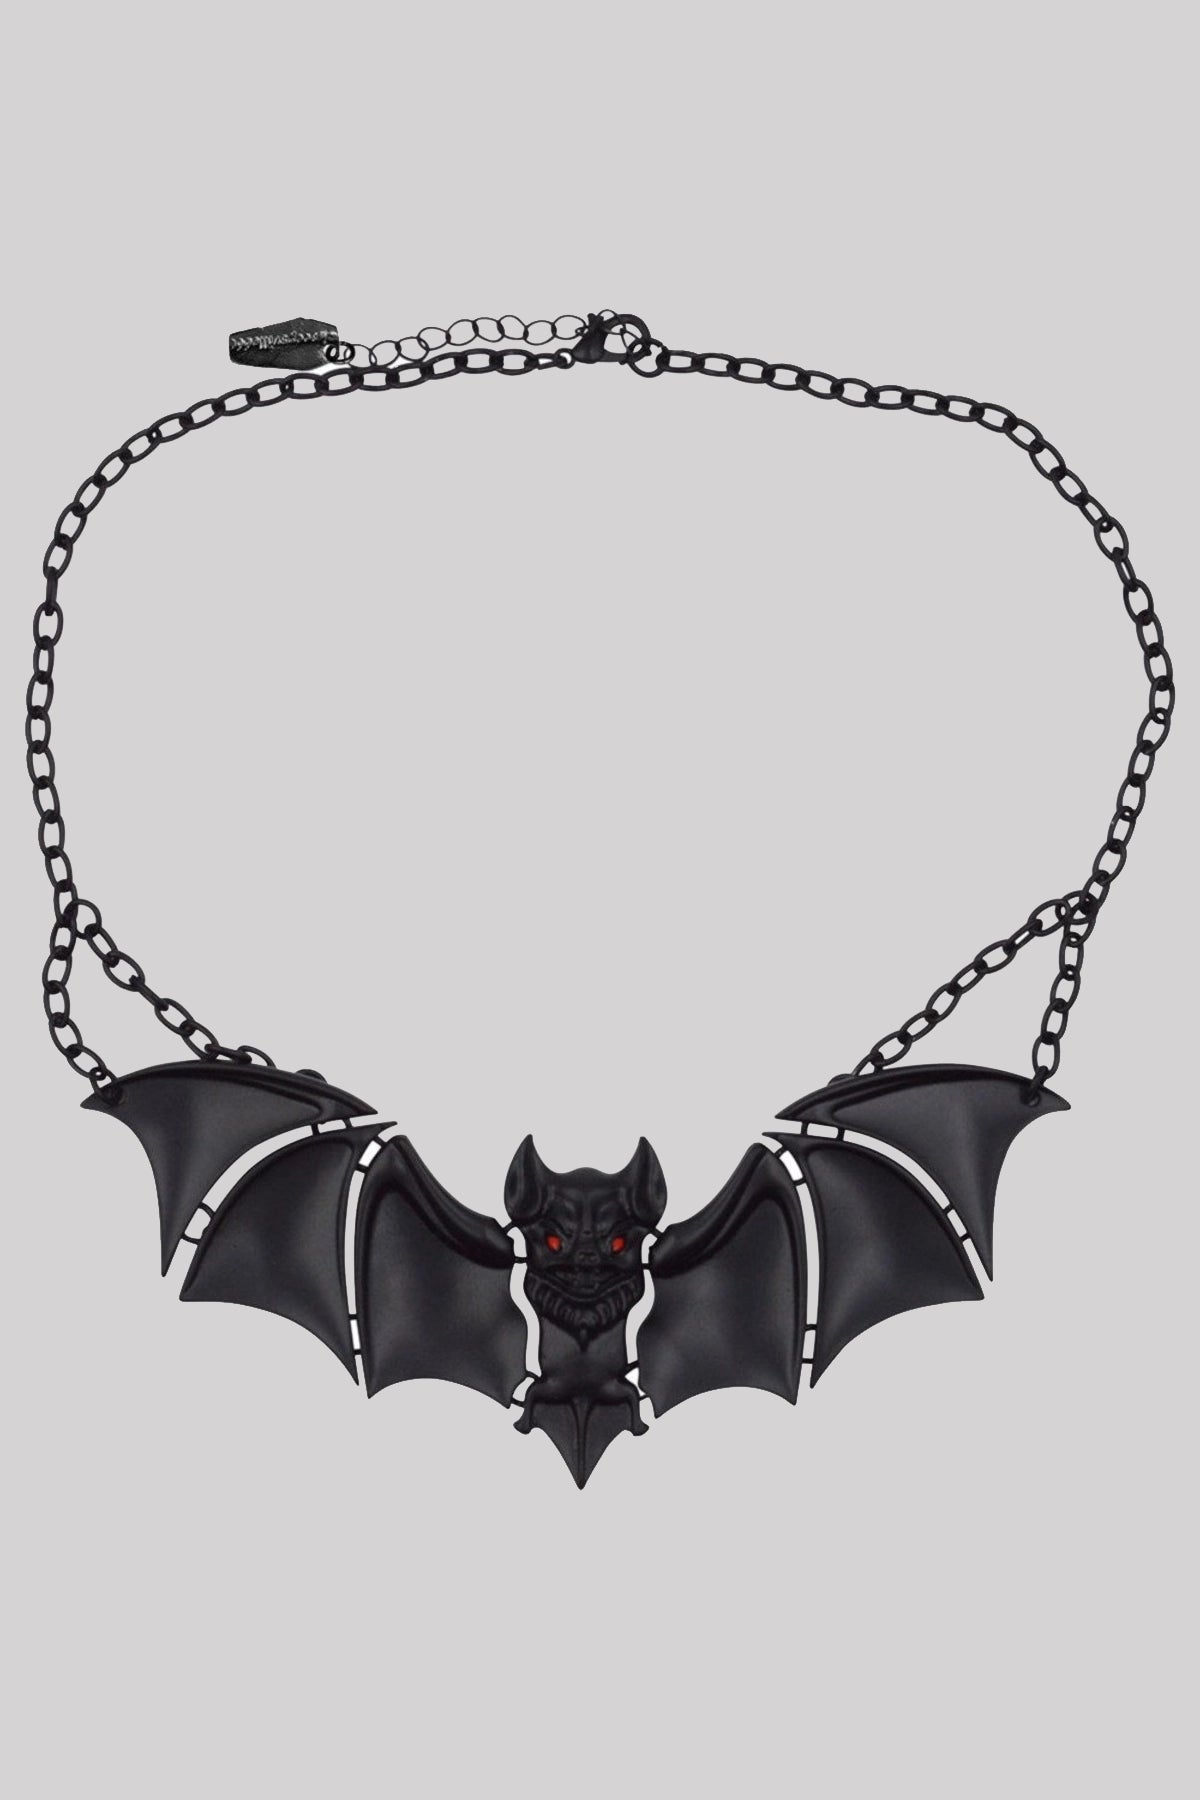 Kreepsville 666 Creature Of The Night Bat Black Goth Necklace